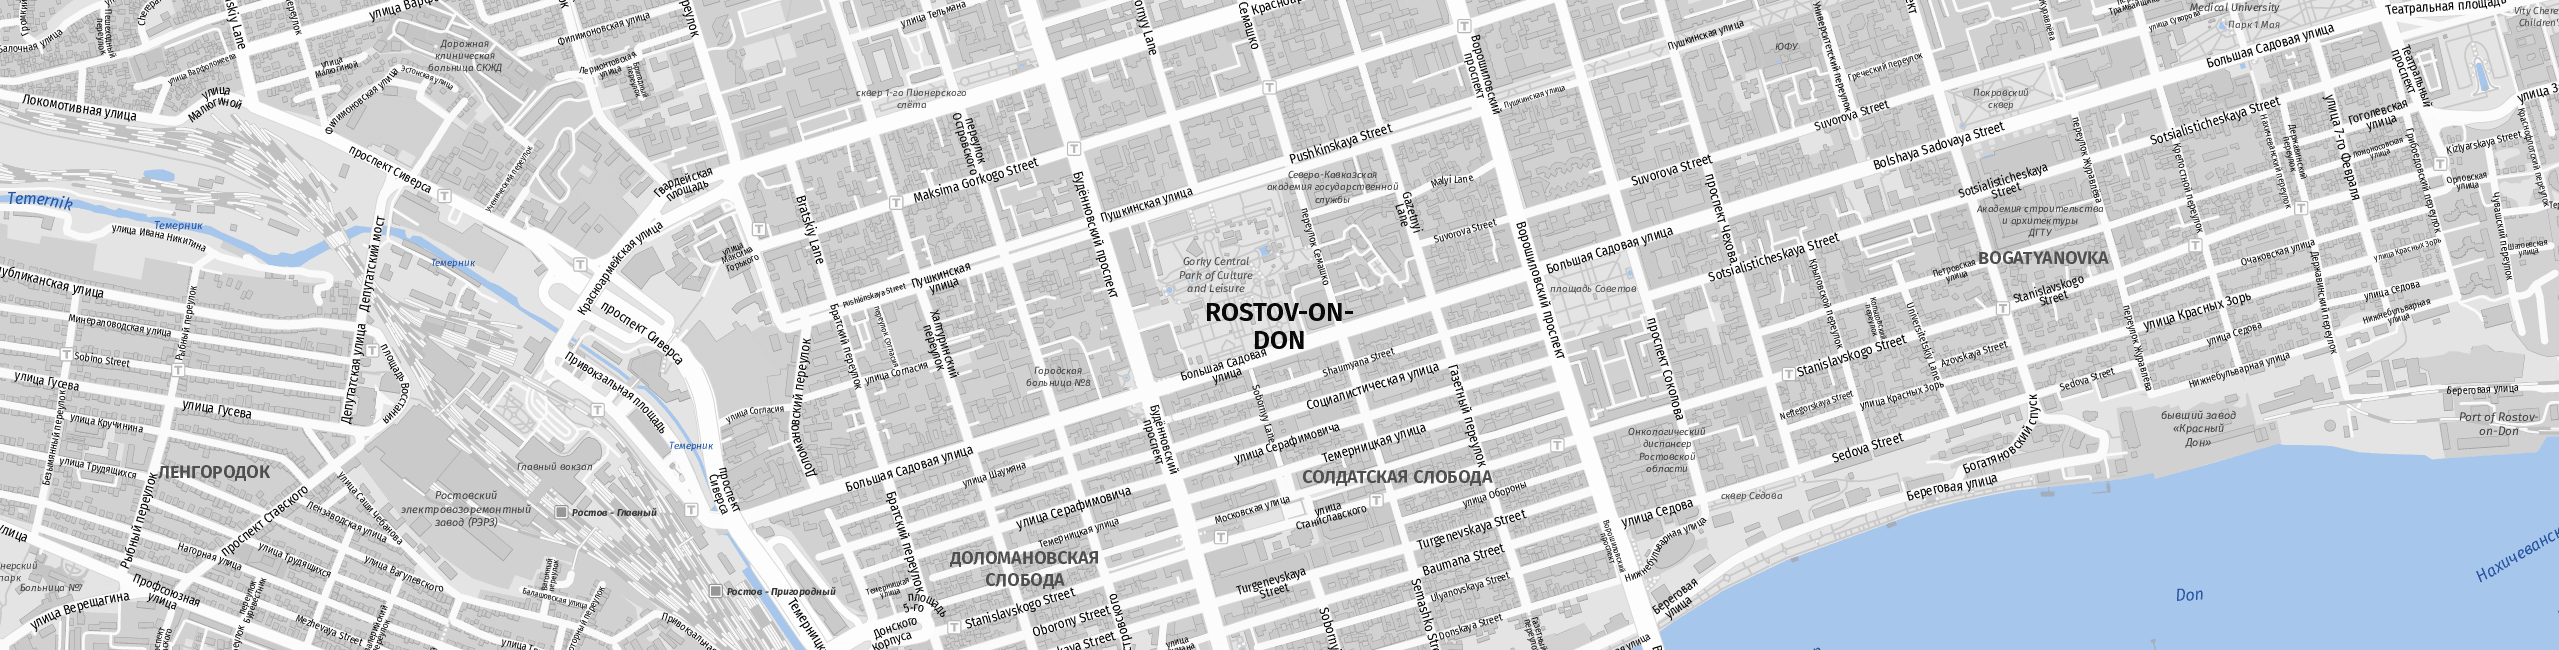 Stadtplan Rostov-on-Don zum Downloaden.